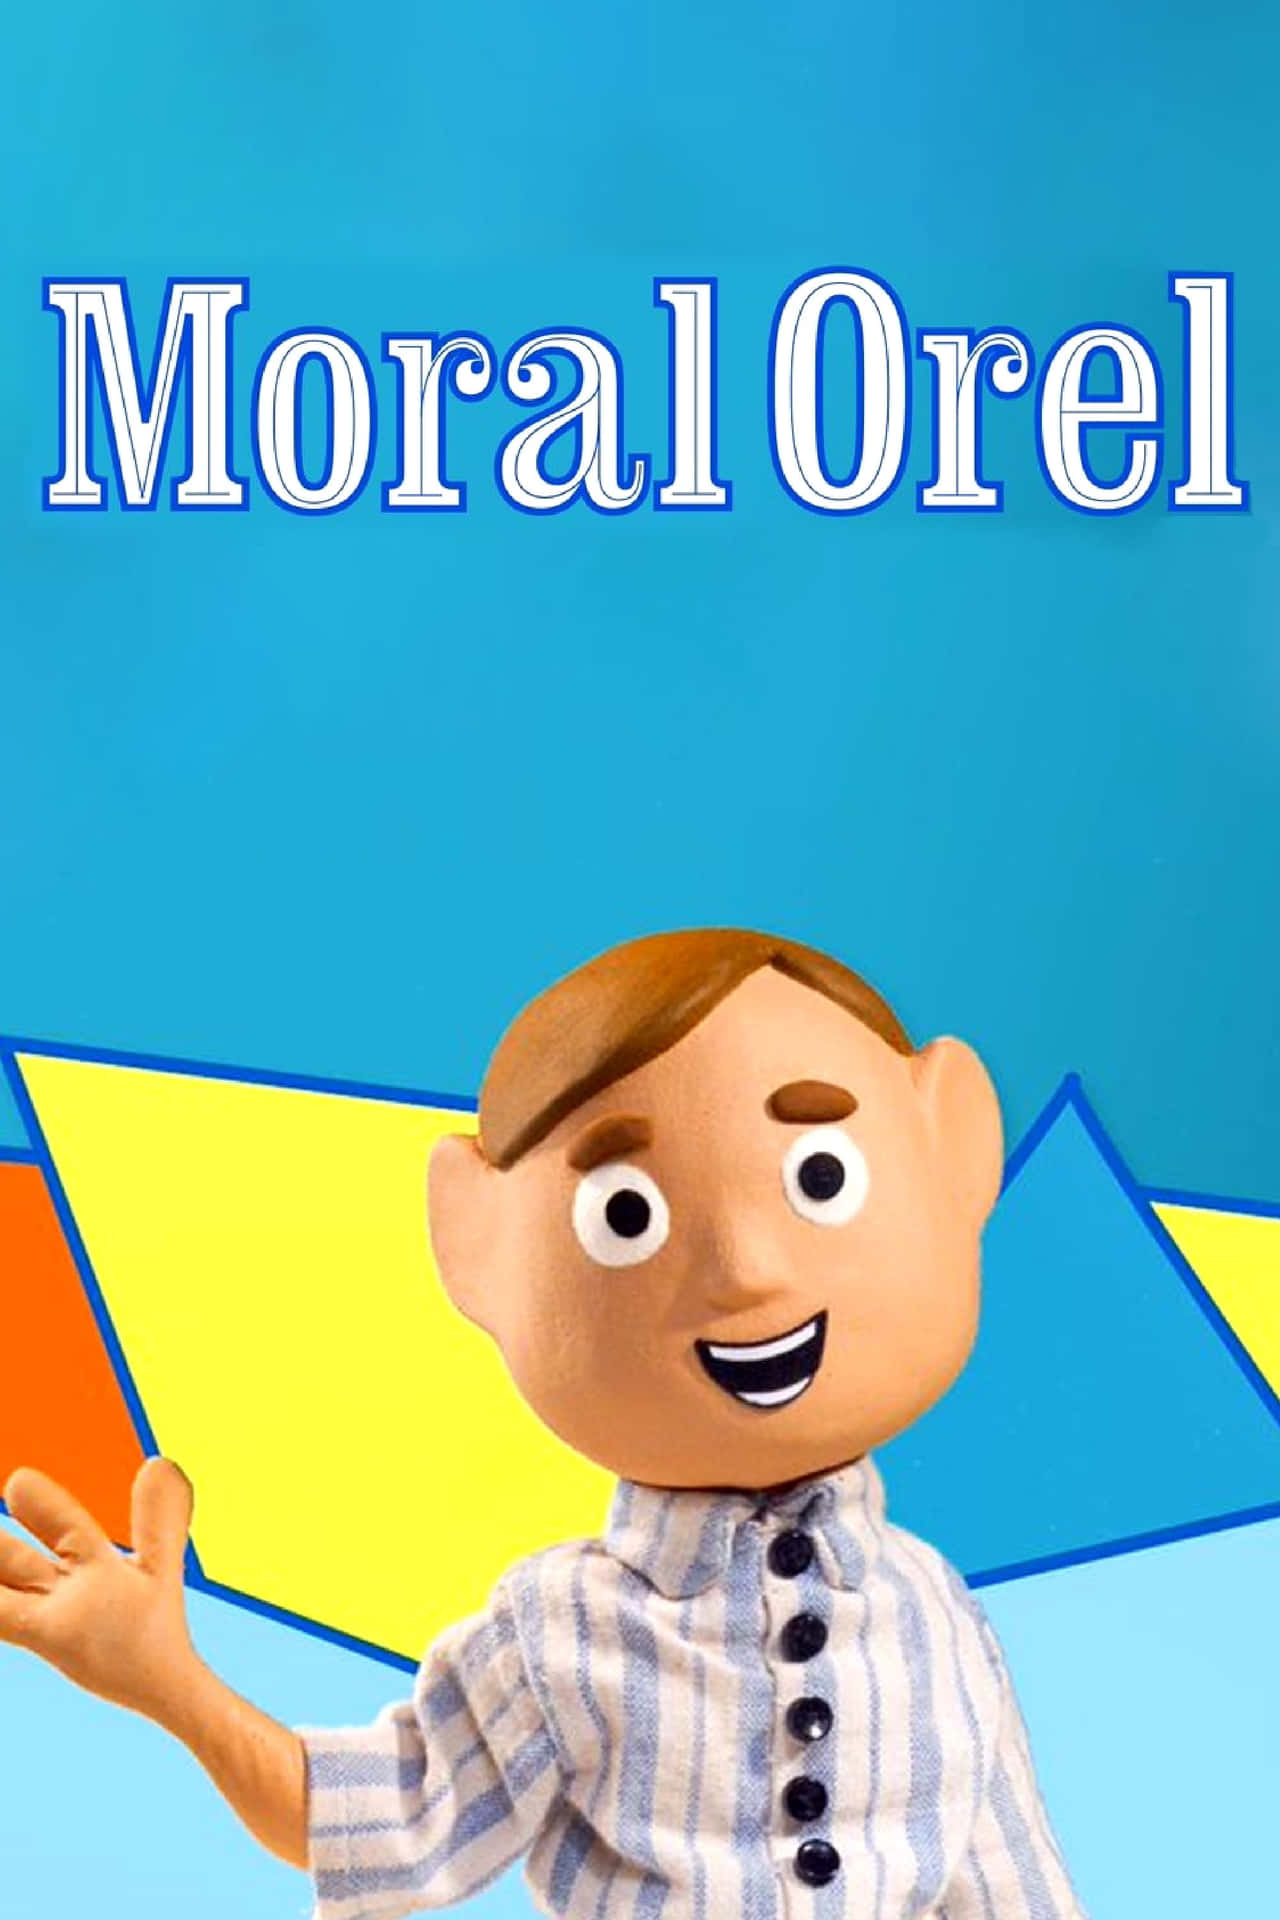 Moral Orel Waving Wallpaper